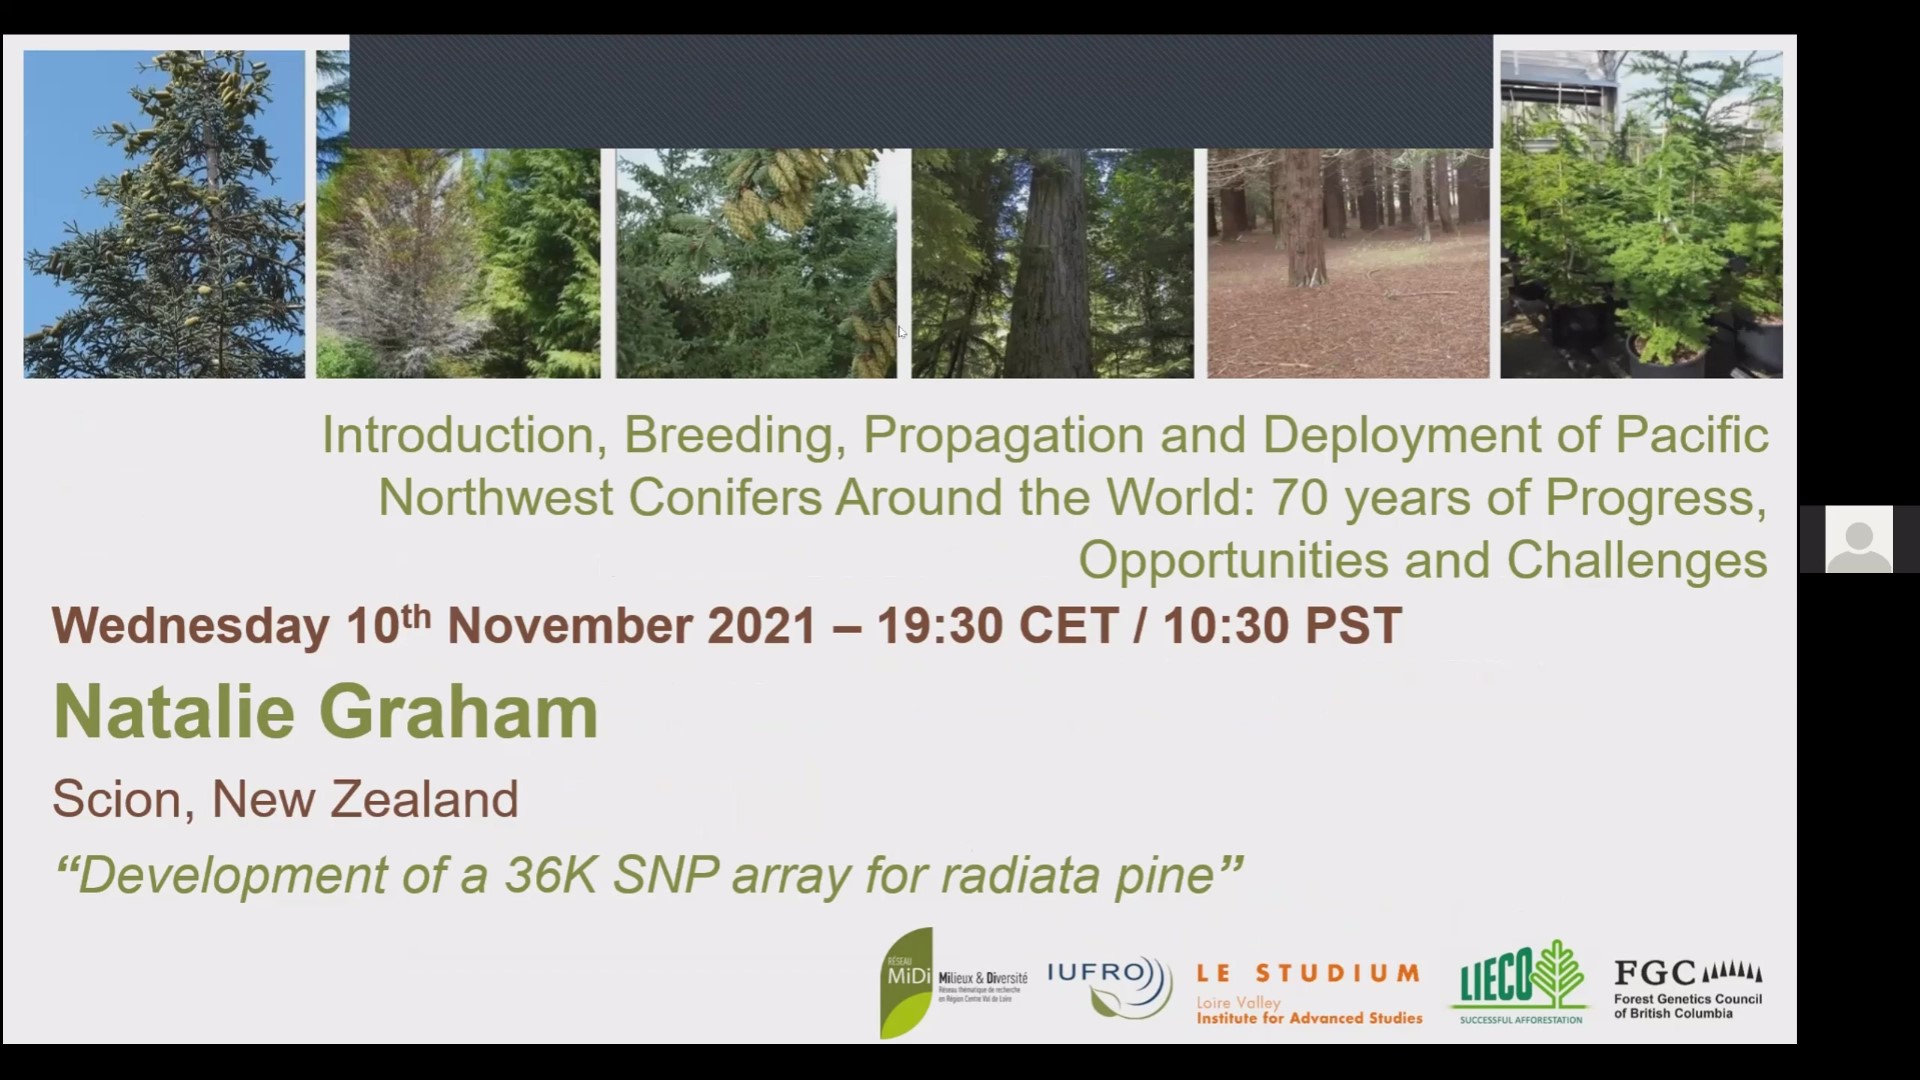 Development of a 36K SNP array for radiata pine - Natalie Graham